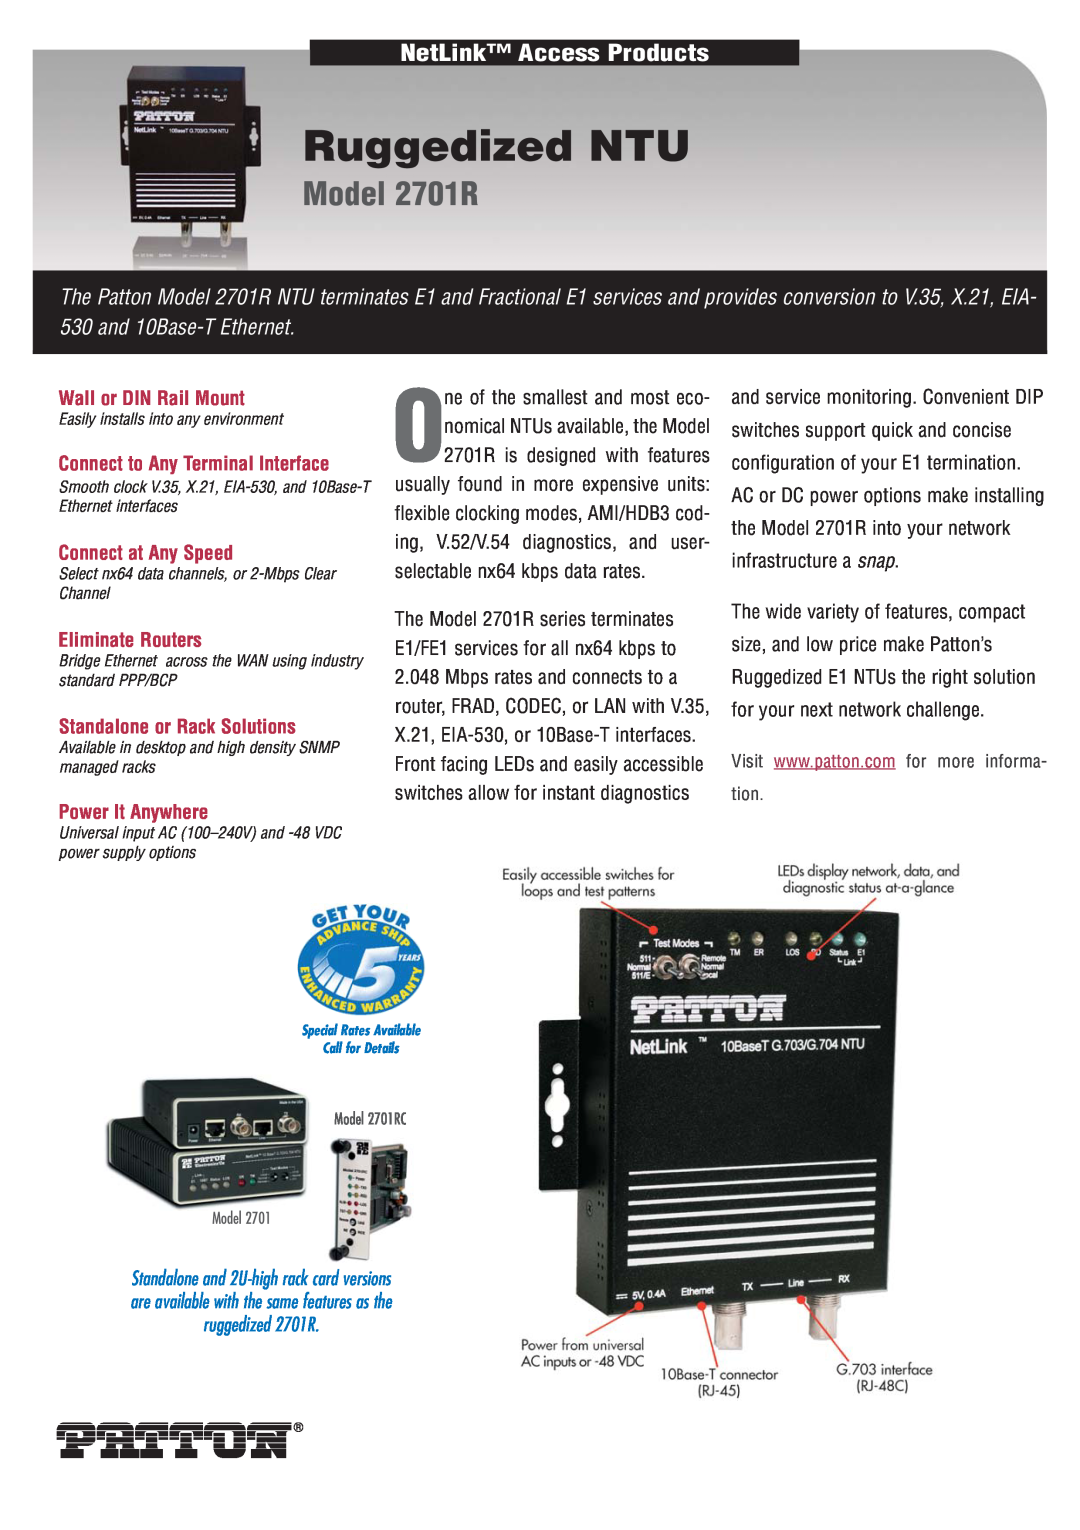 Patton electronic manual Ruggedized NTU, Model 2701R, NetLink Access Products, Wall or DIN Rail Mount, tion 